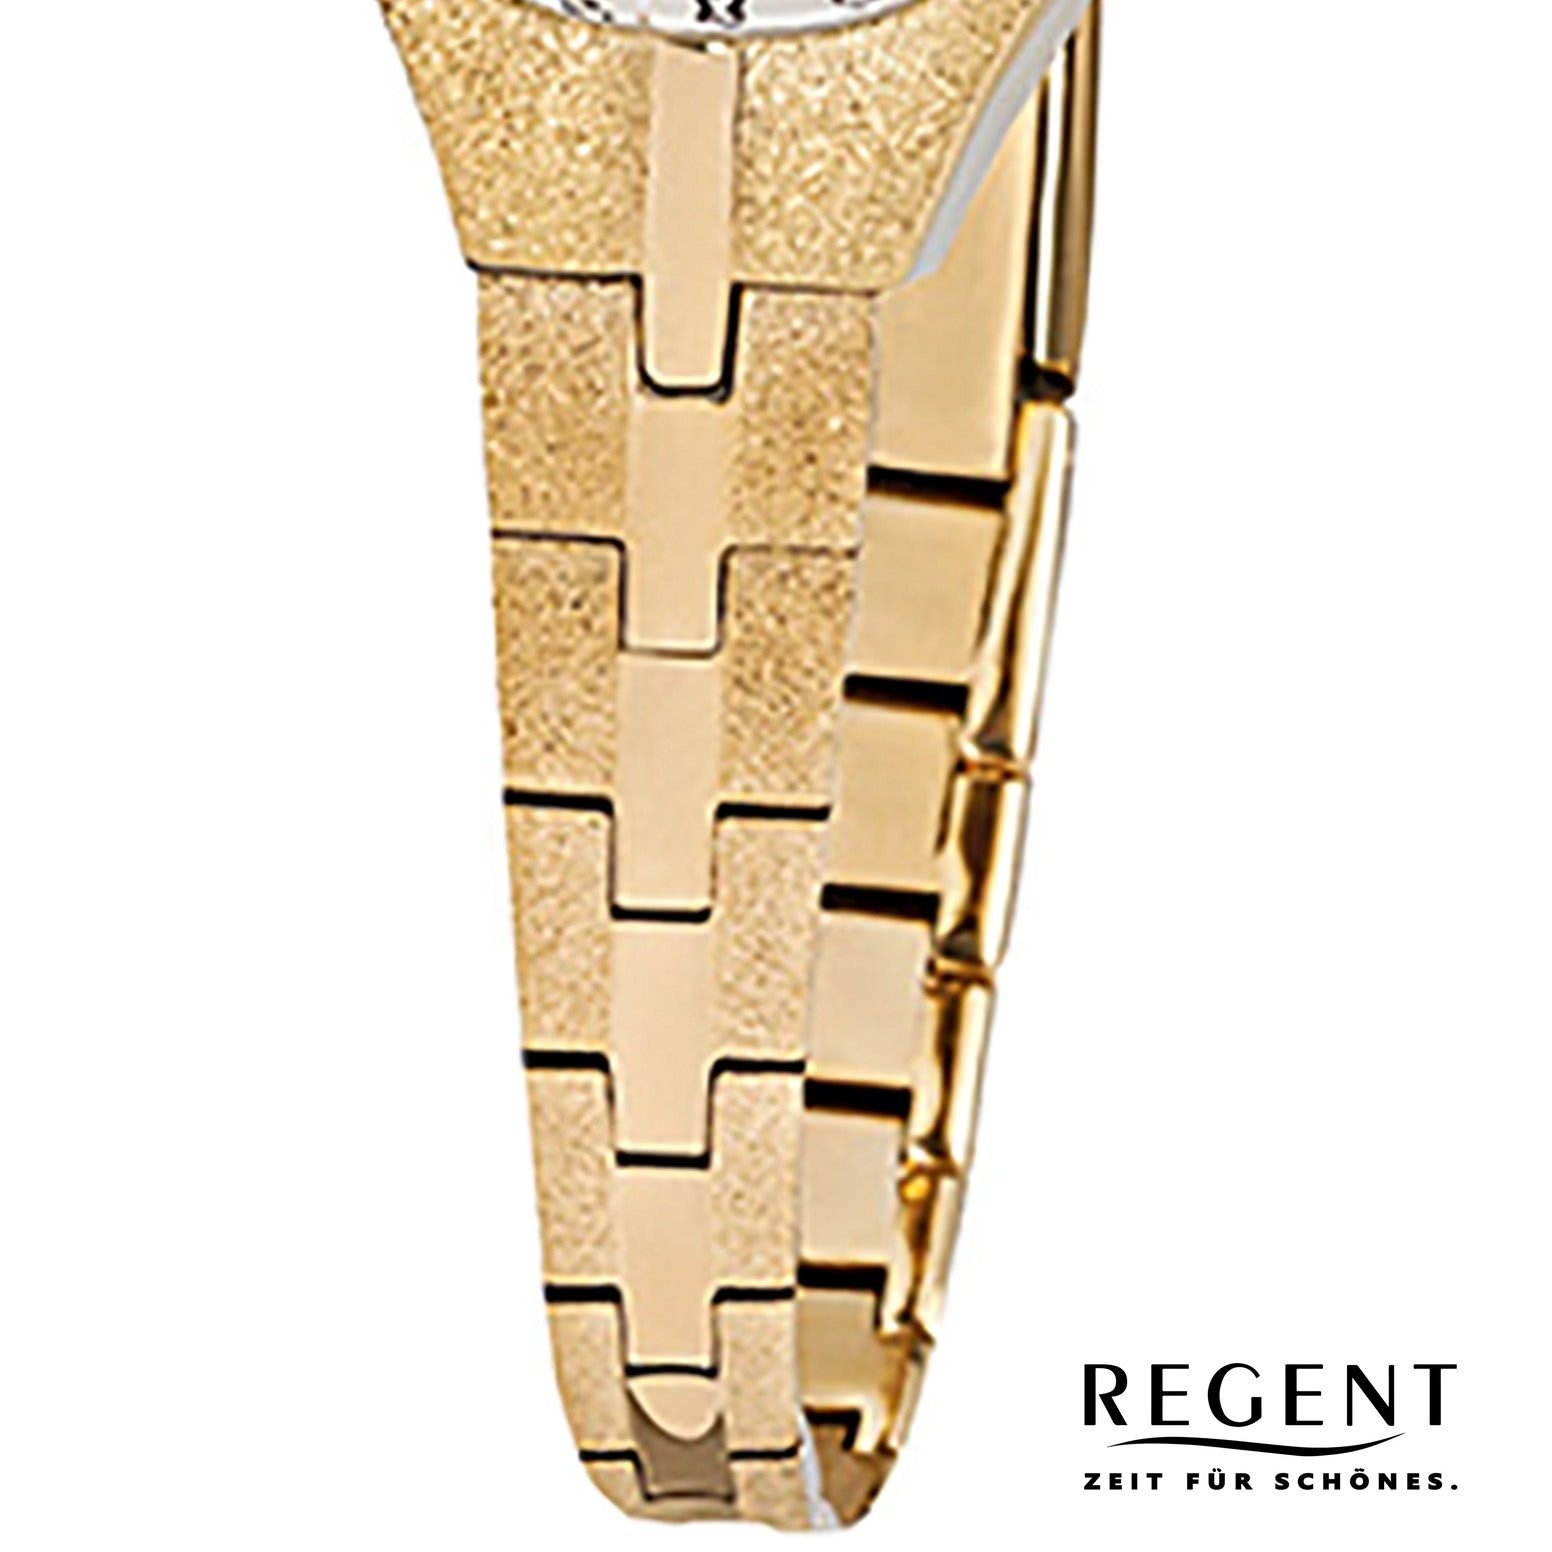 Damen eckig, Regent F-308, (ca. klein Regent Edelstahl, Analog 18x23mm), Quarzuhr gold Armbanduhr ionenplattiert Damen-Armbanduhr